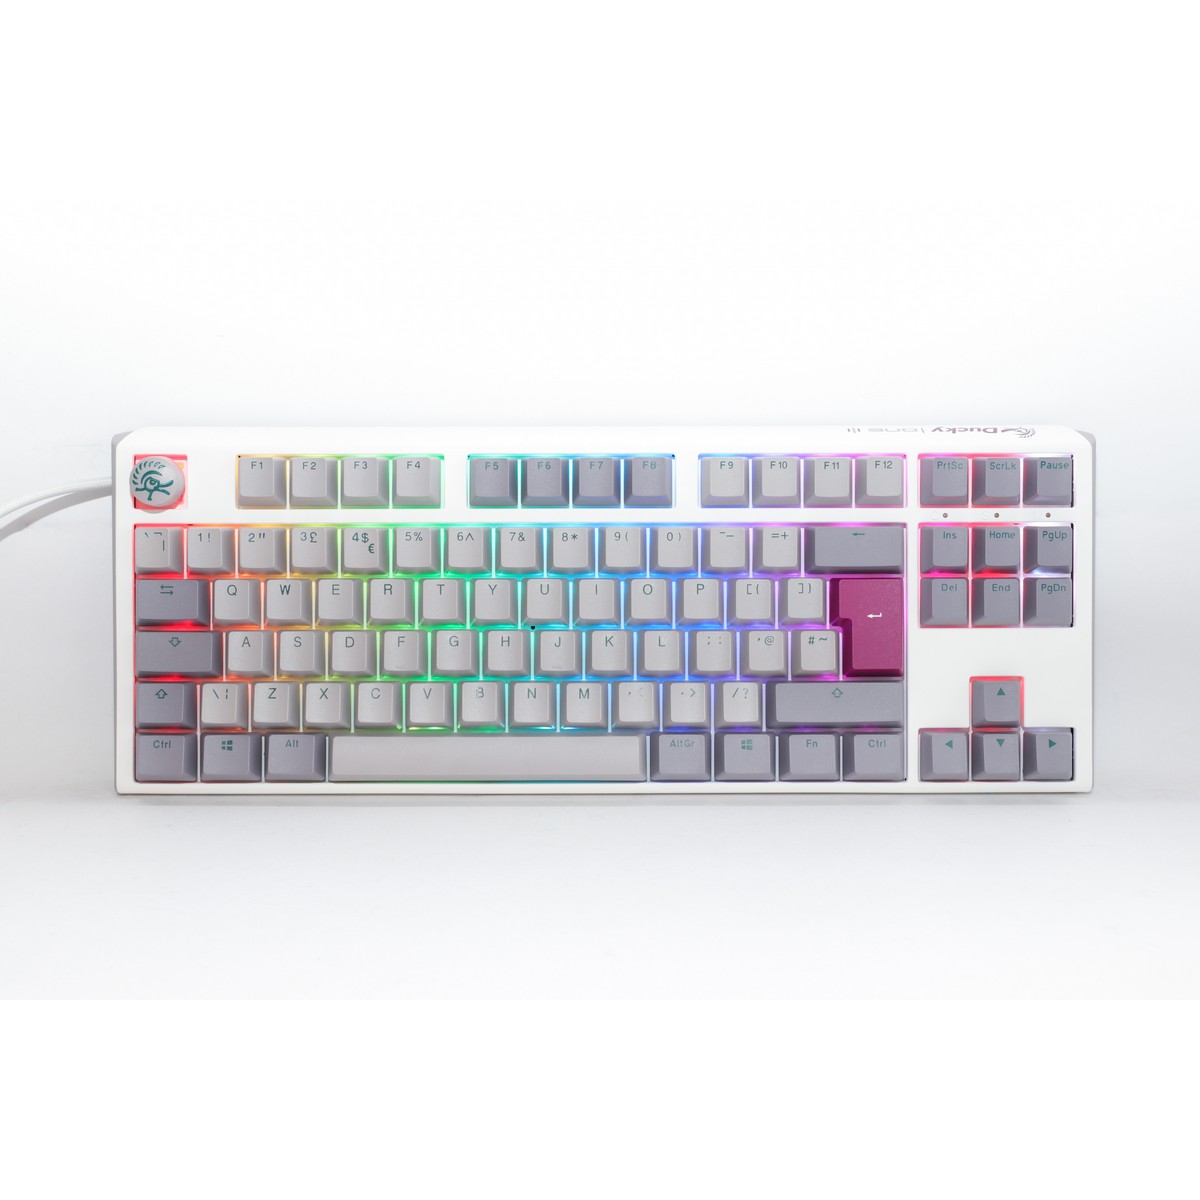 Ducky One 3 Mist TKL 80% USB RGB Mechanical Gaming Keyboard Cherry MX Blue Switch - UK Layout